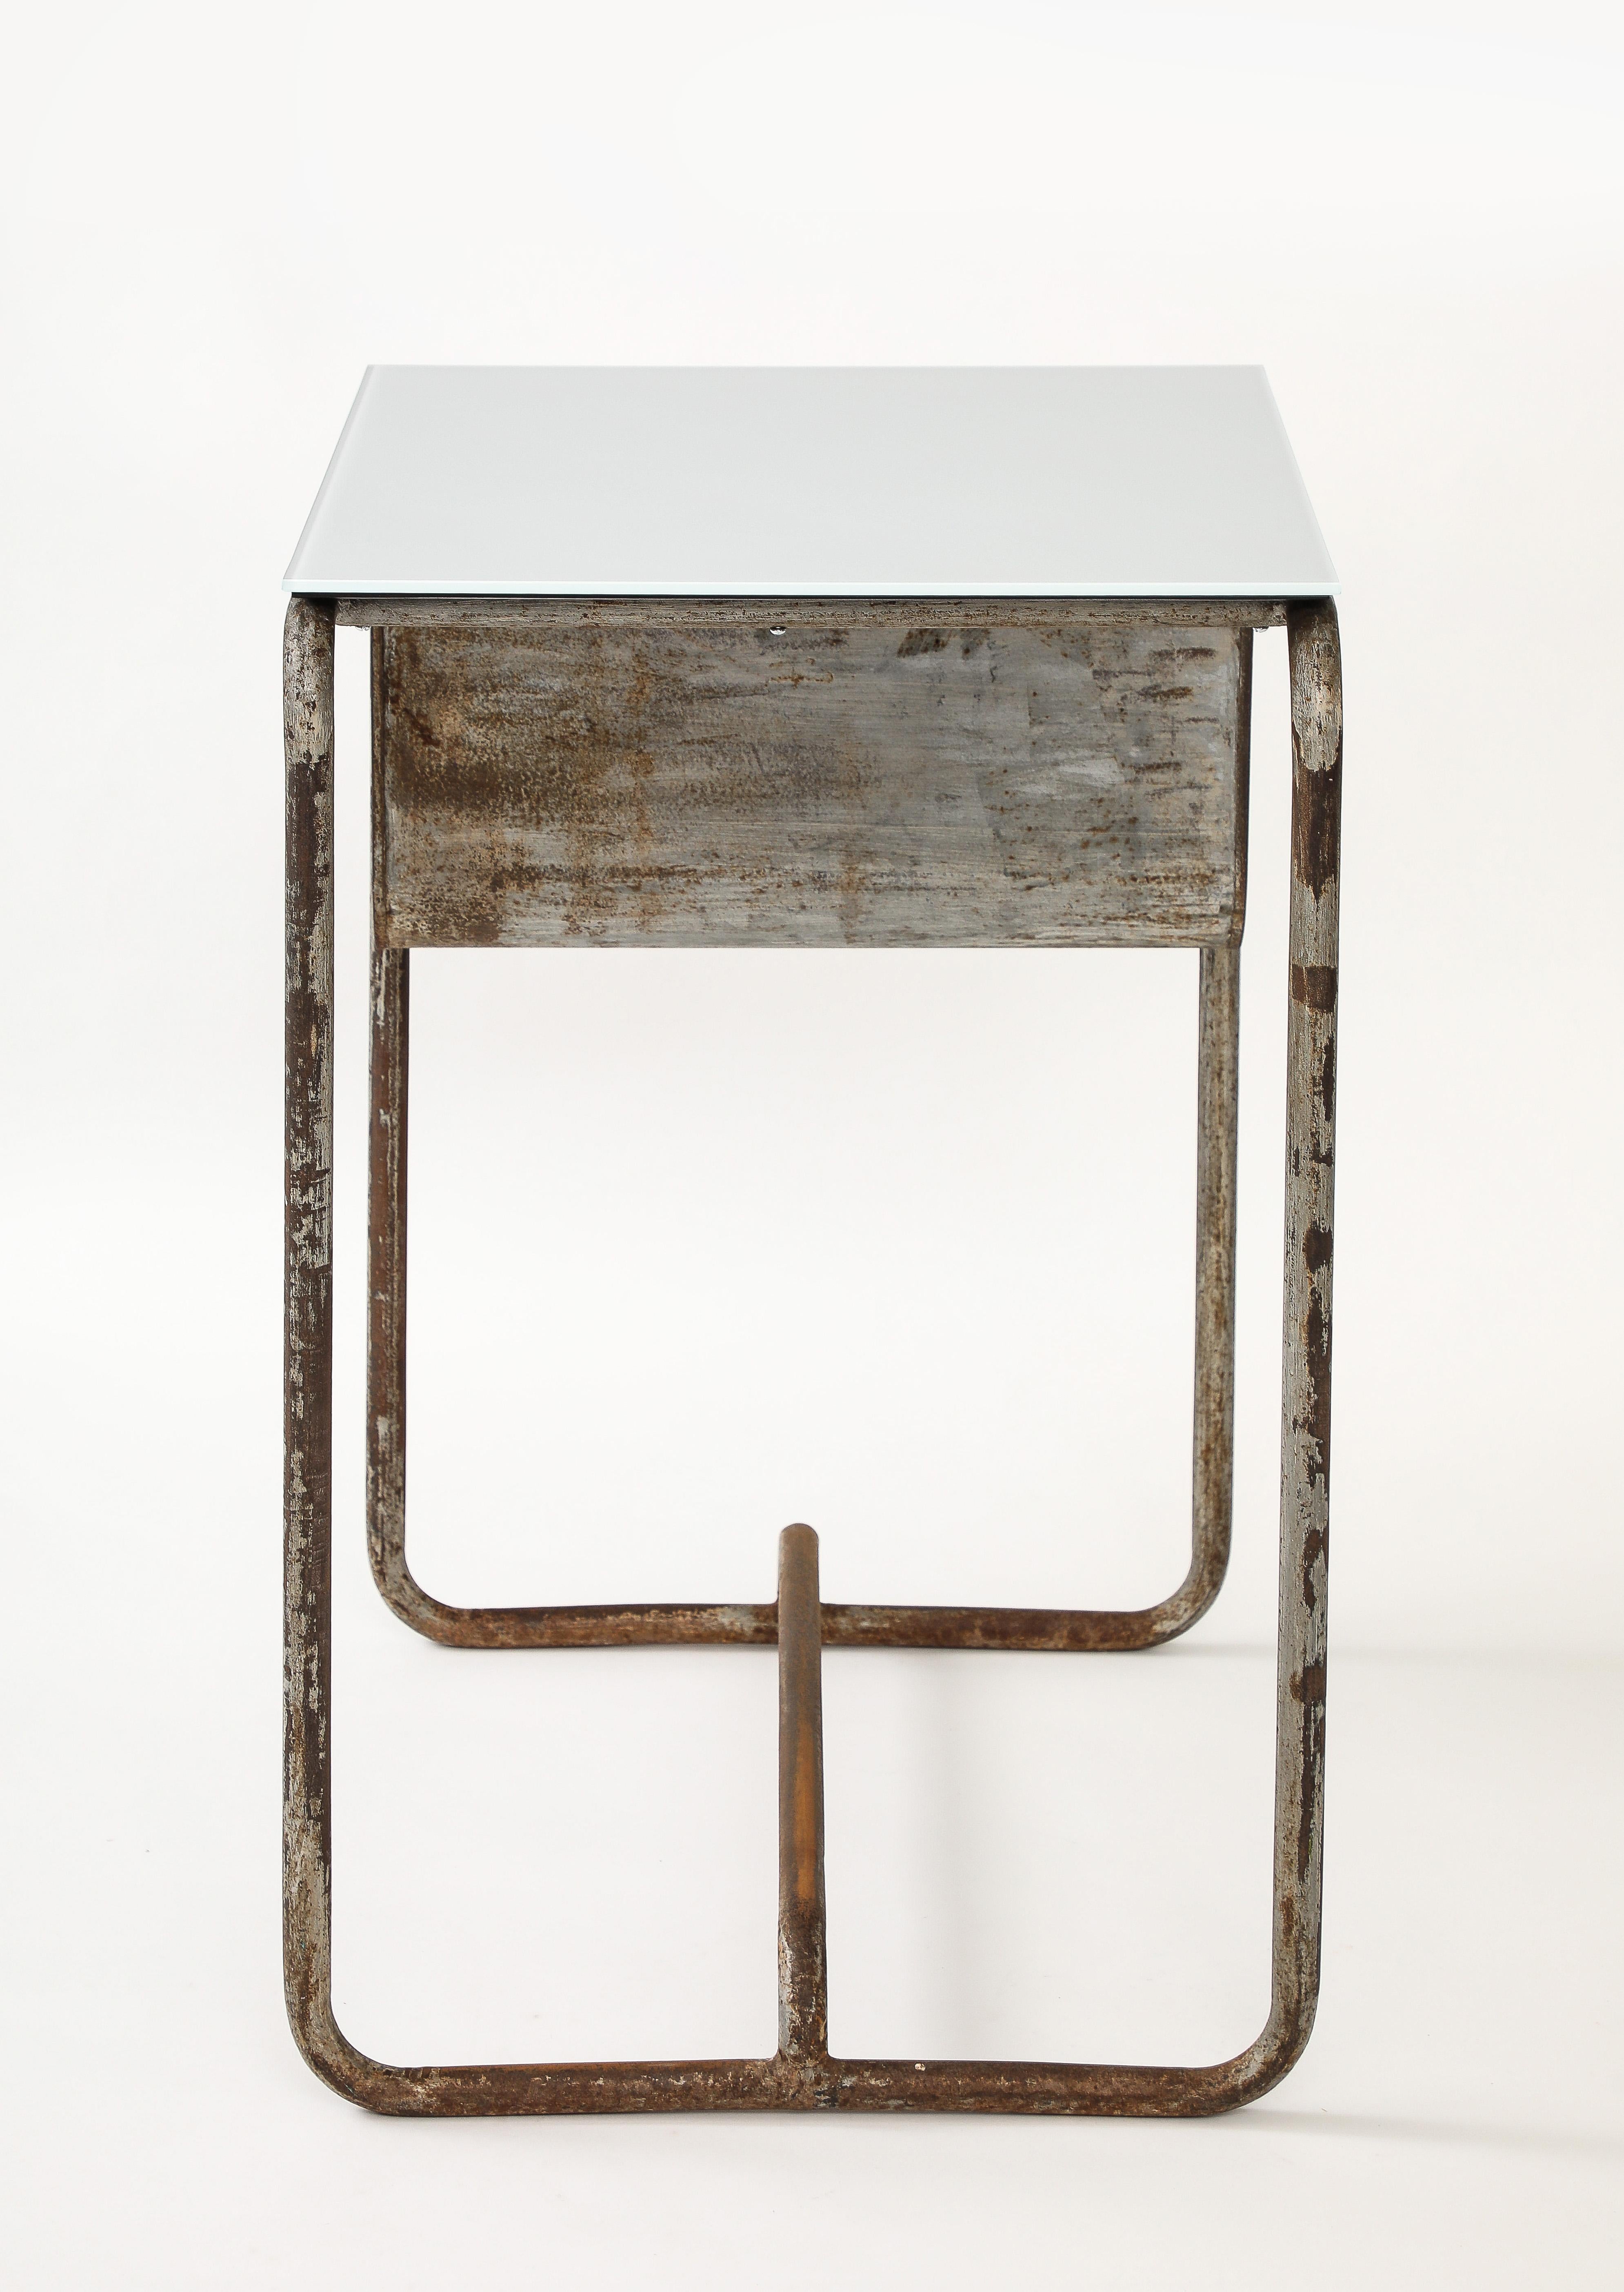 Steel Early Modernist Desk Side Table, Nickel Patina, Opaline Top, France, c. 1920 For Sale